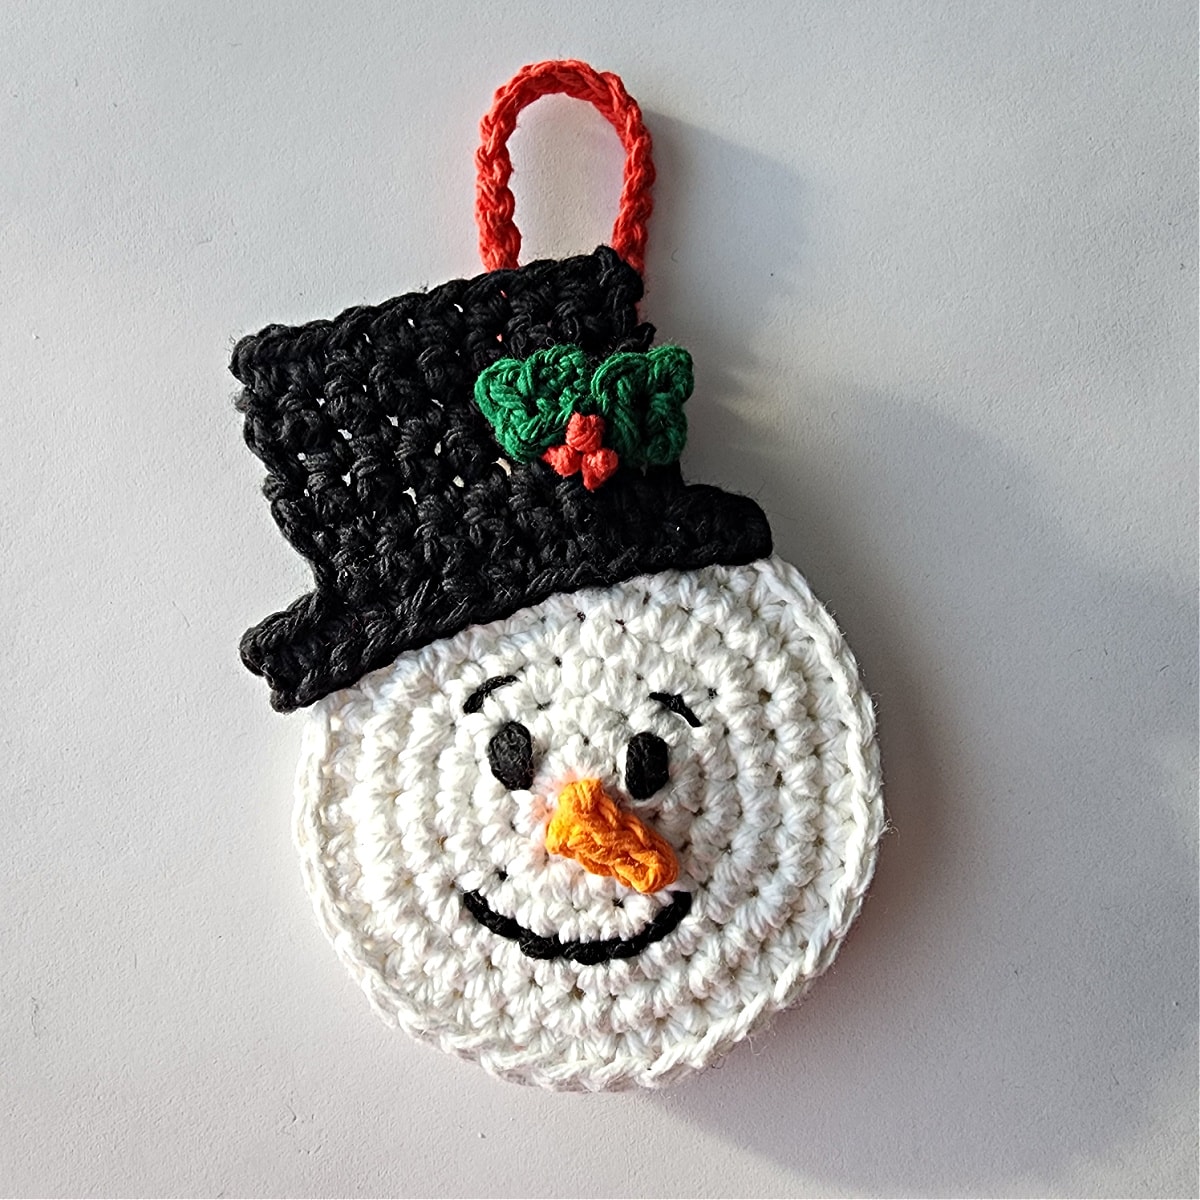 crochet top hat sewn on snowman ornament